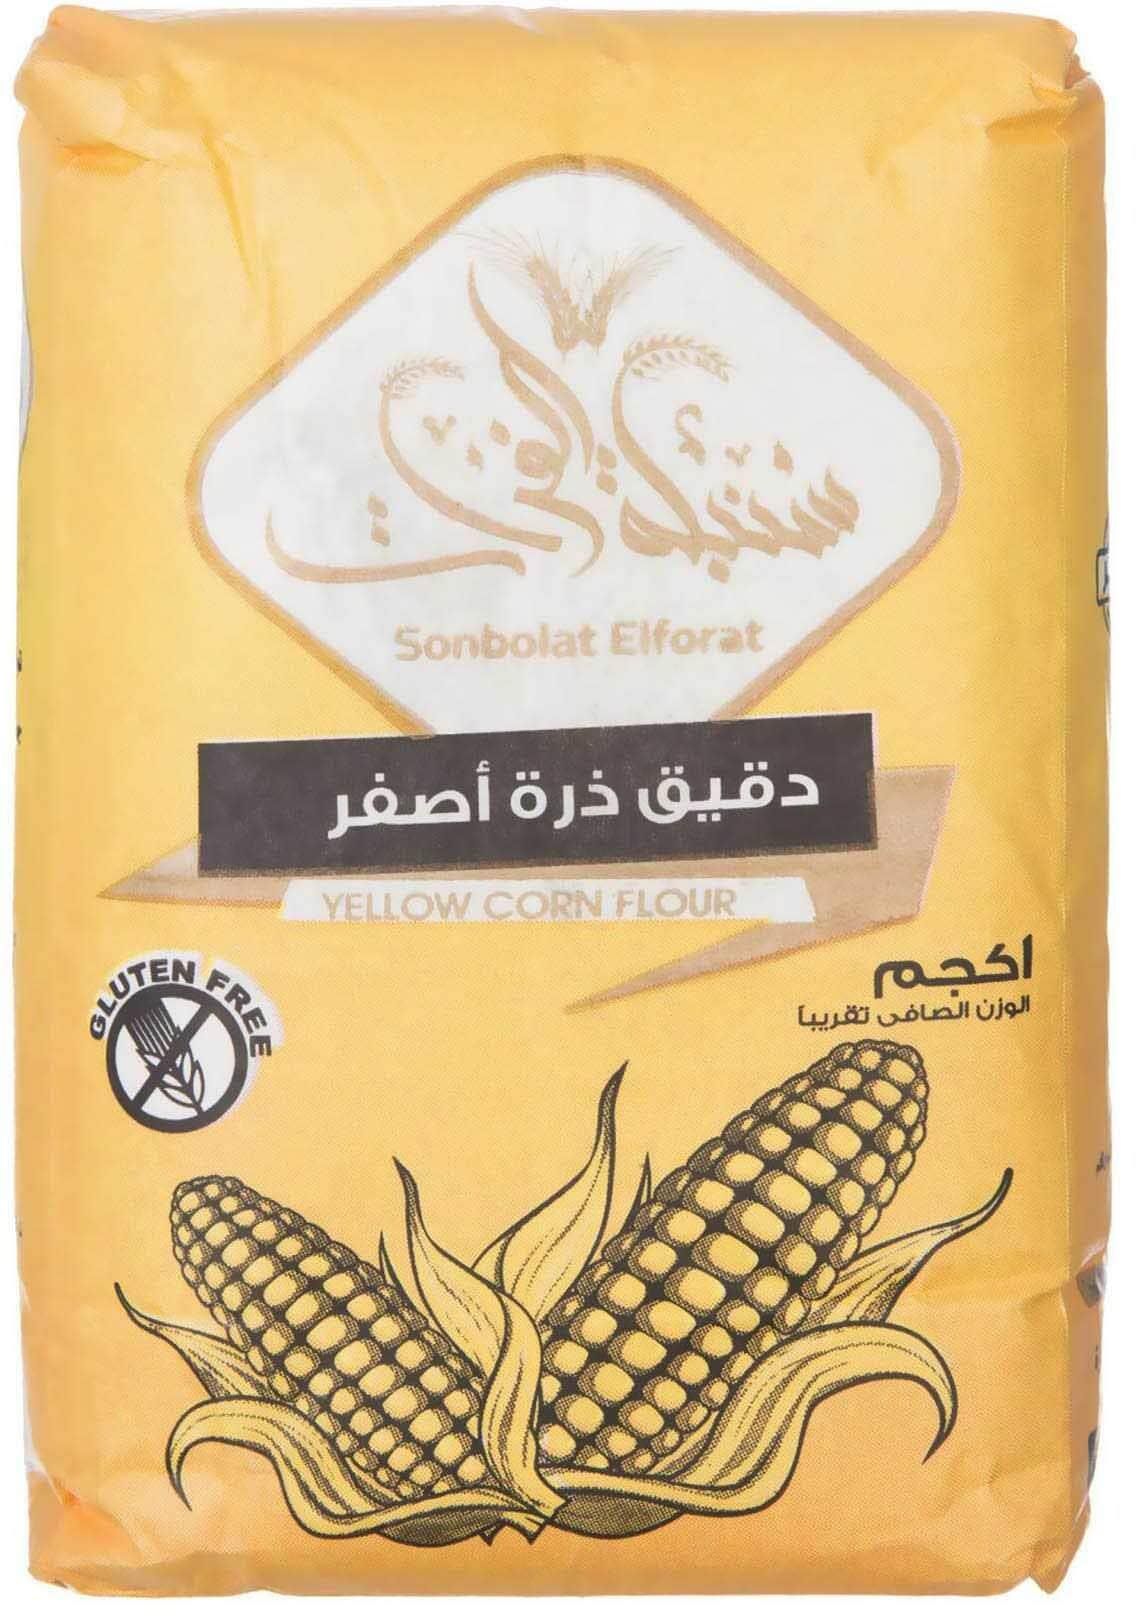 Sonbolat El Forat Yelow Corn Flour - 1 kg